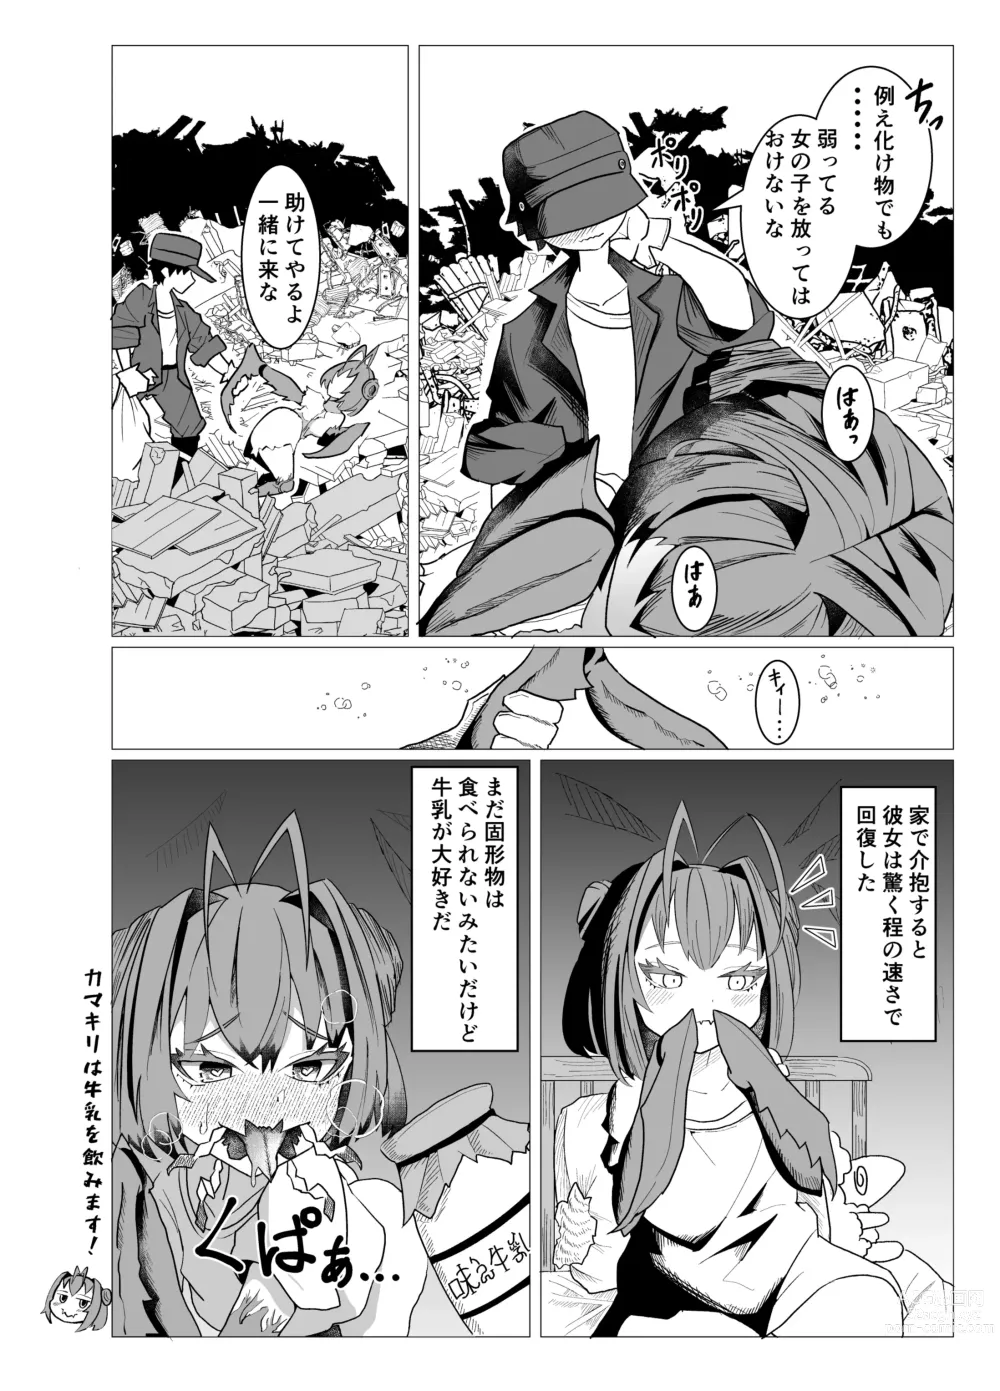 Page 6 of doujinshi kama1JPG